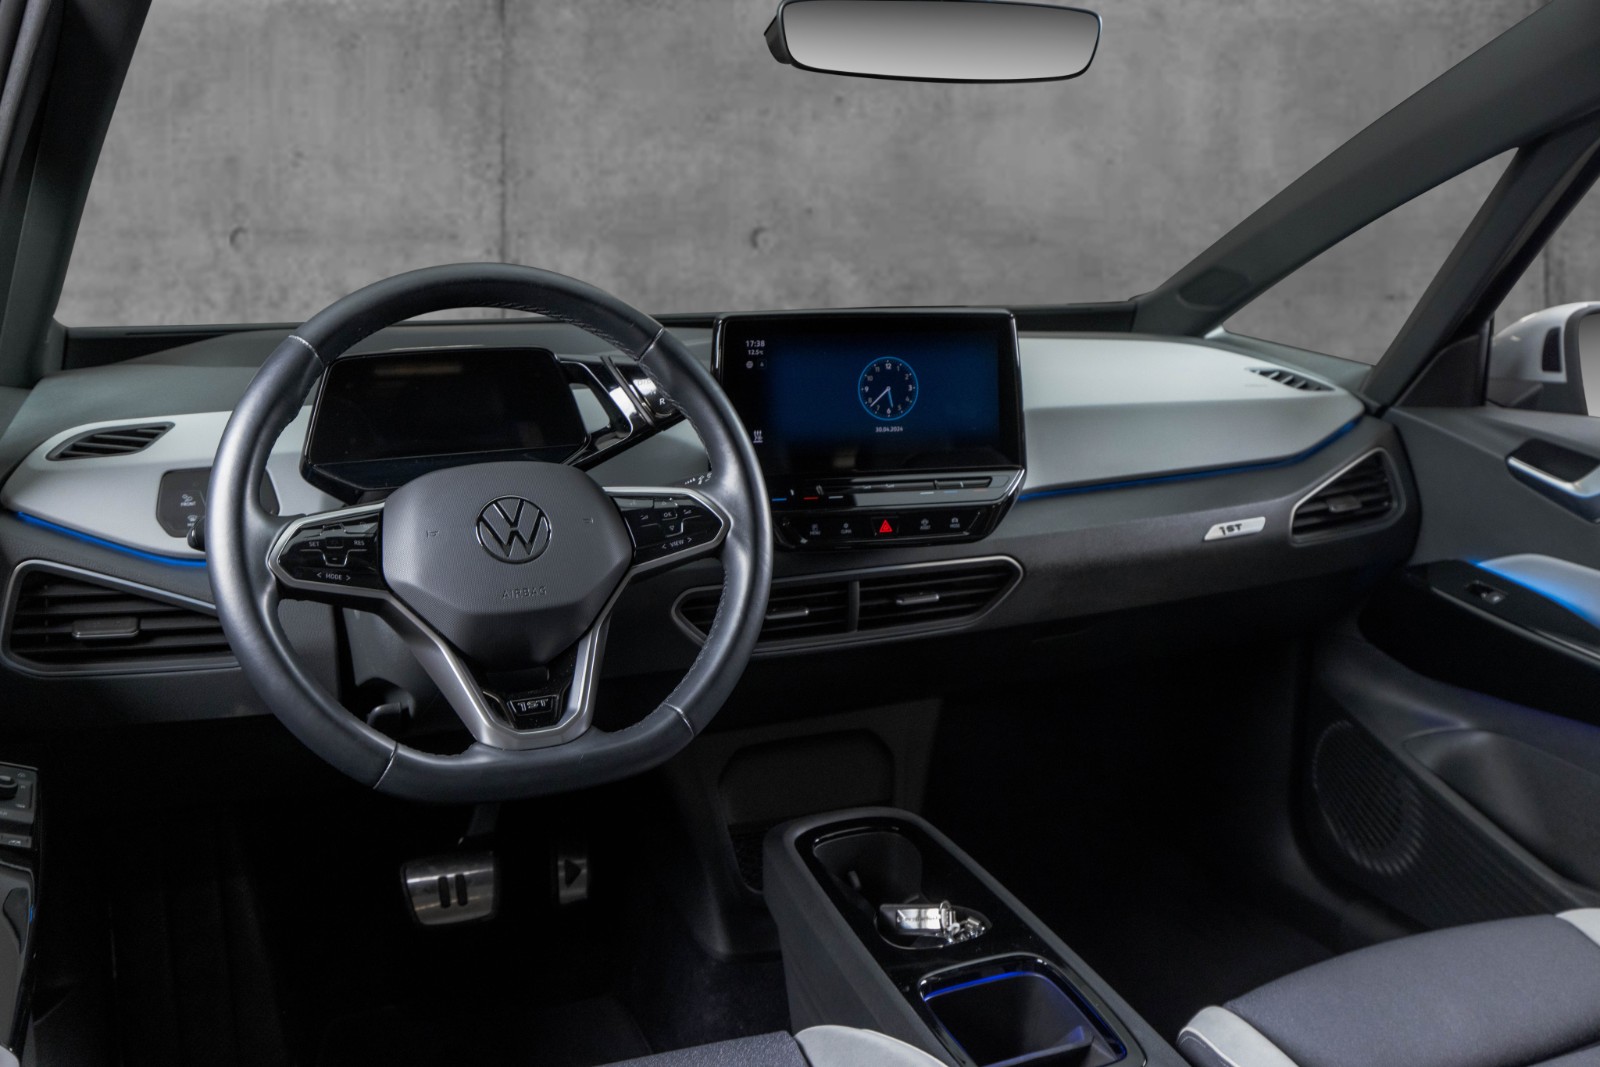 Hovedbilde av Volkswagen ID.3 2021